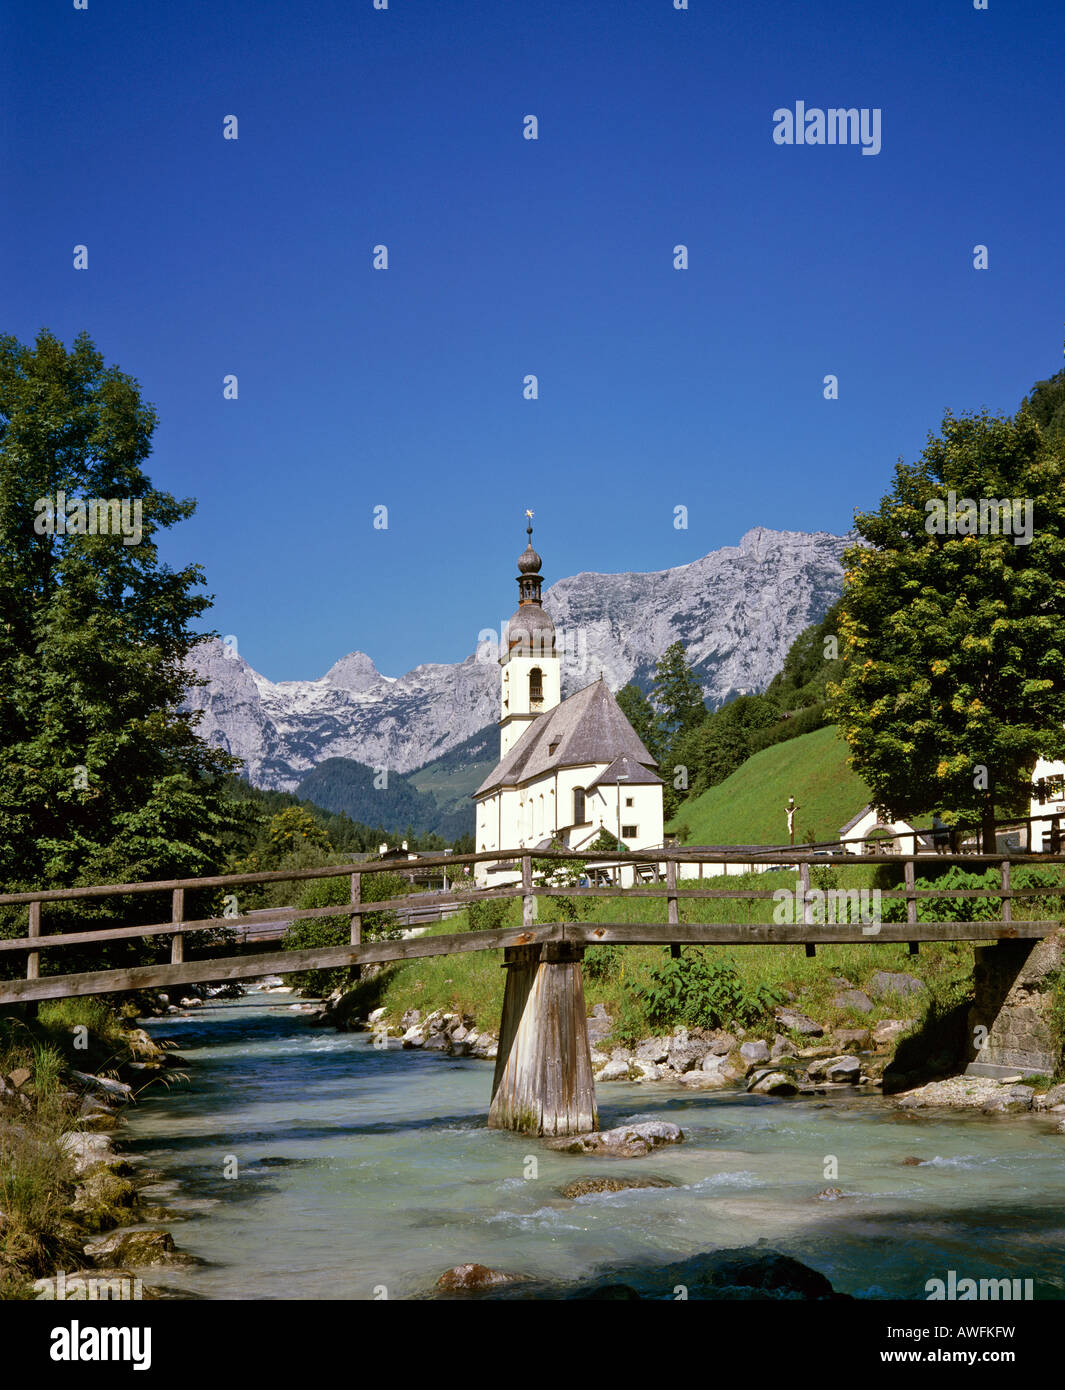 St. Sebastian's Church and Ramsauer Ache River, Ramsau, Berchtesgadener Land region, Upper Bavaria, Bavaria, Germany, Europe Stock Photo